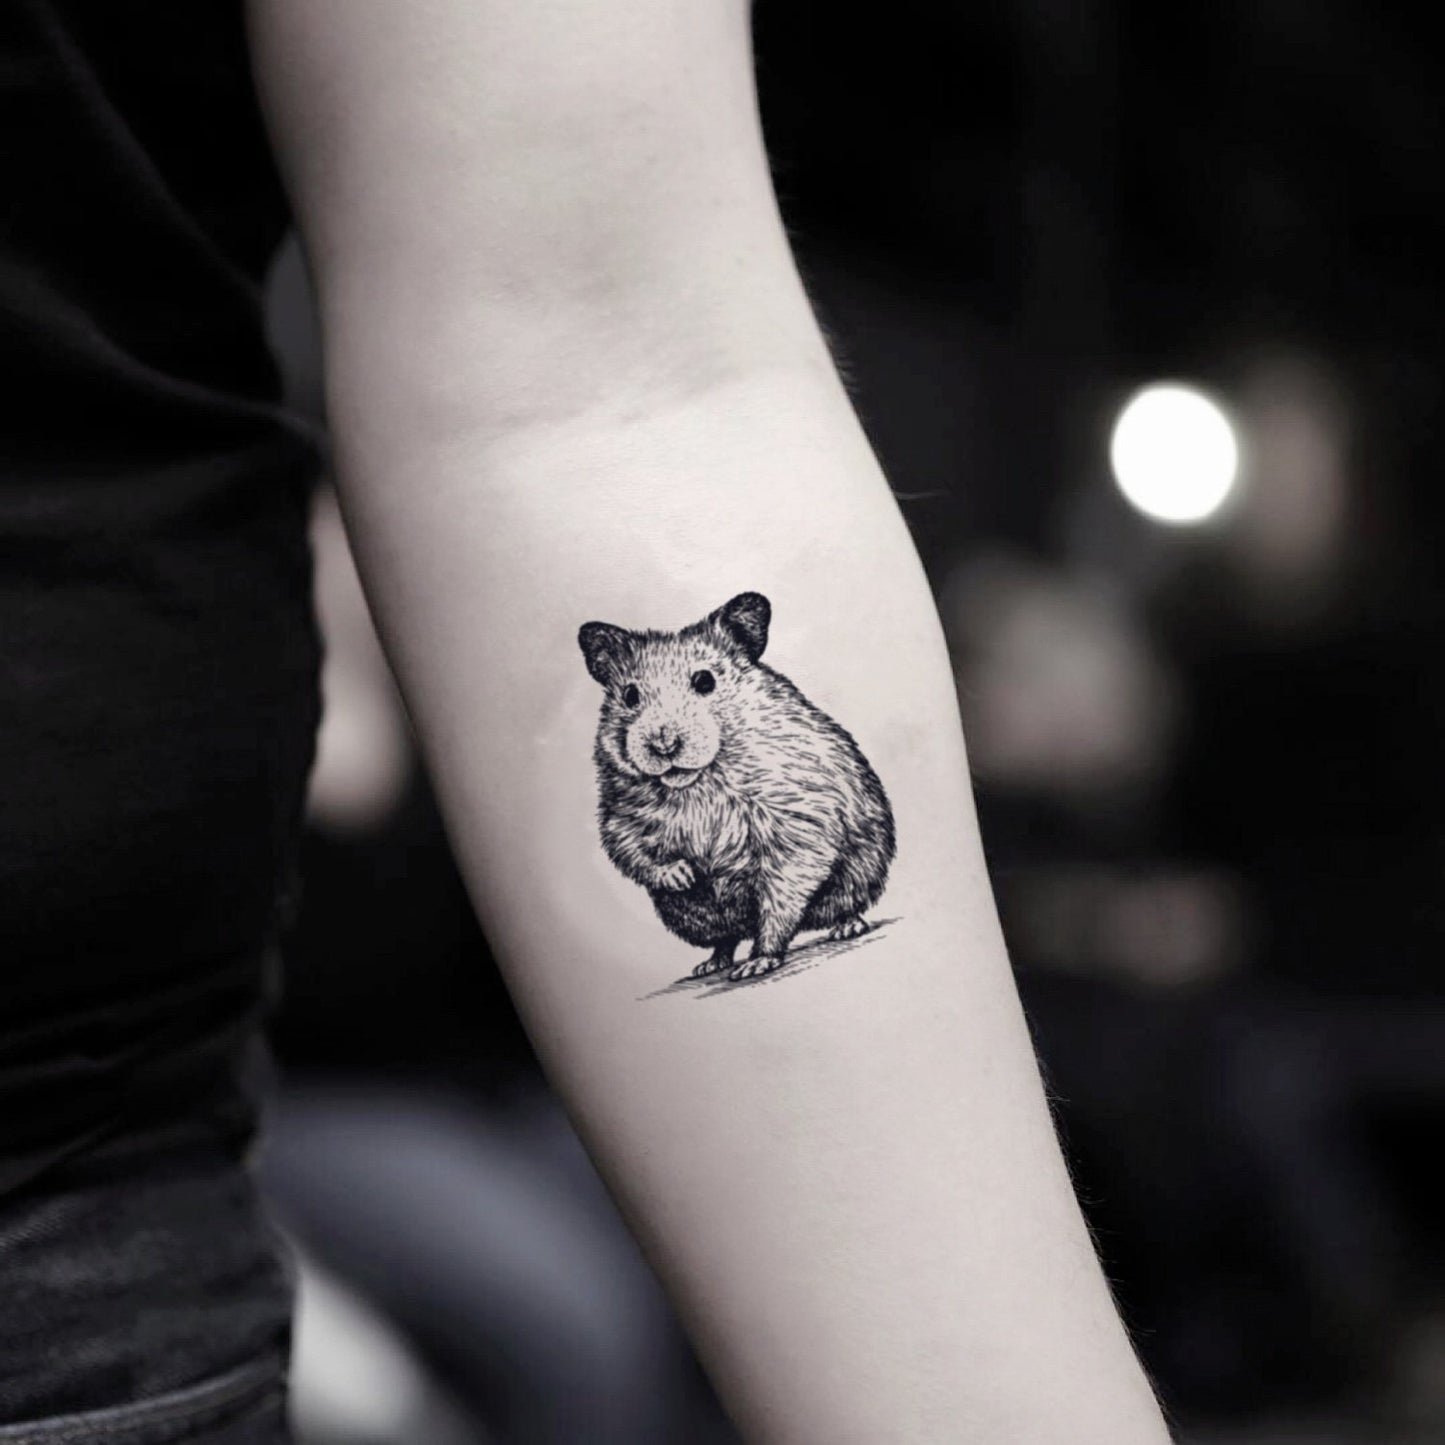 fake small hamster animal temporary tattoo sticker design idea on inner arm